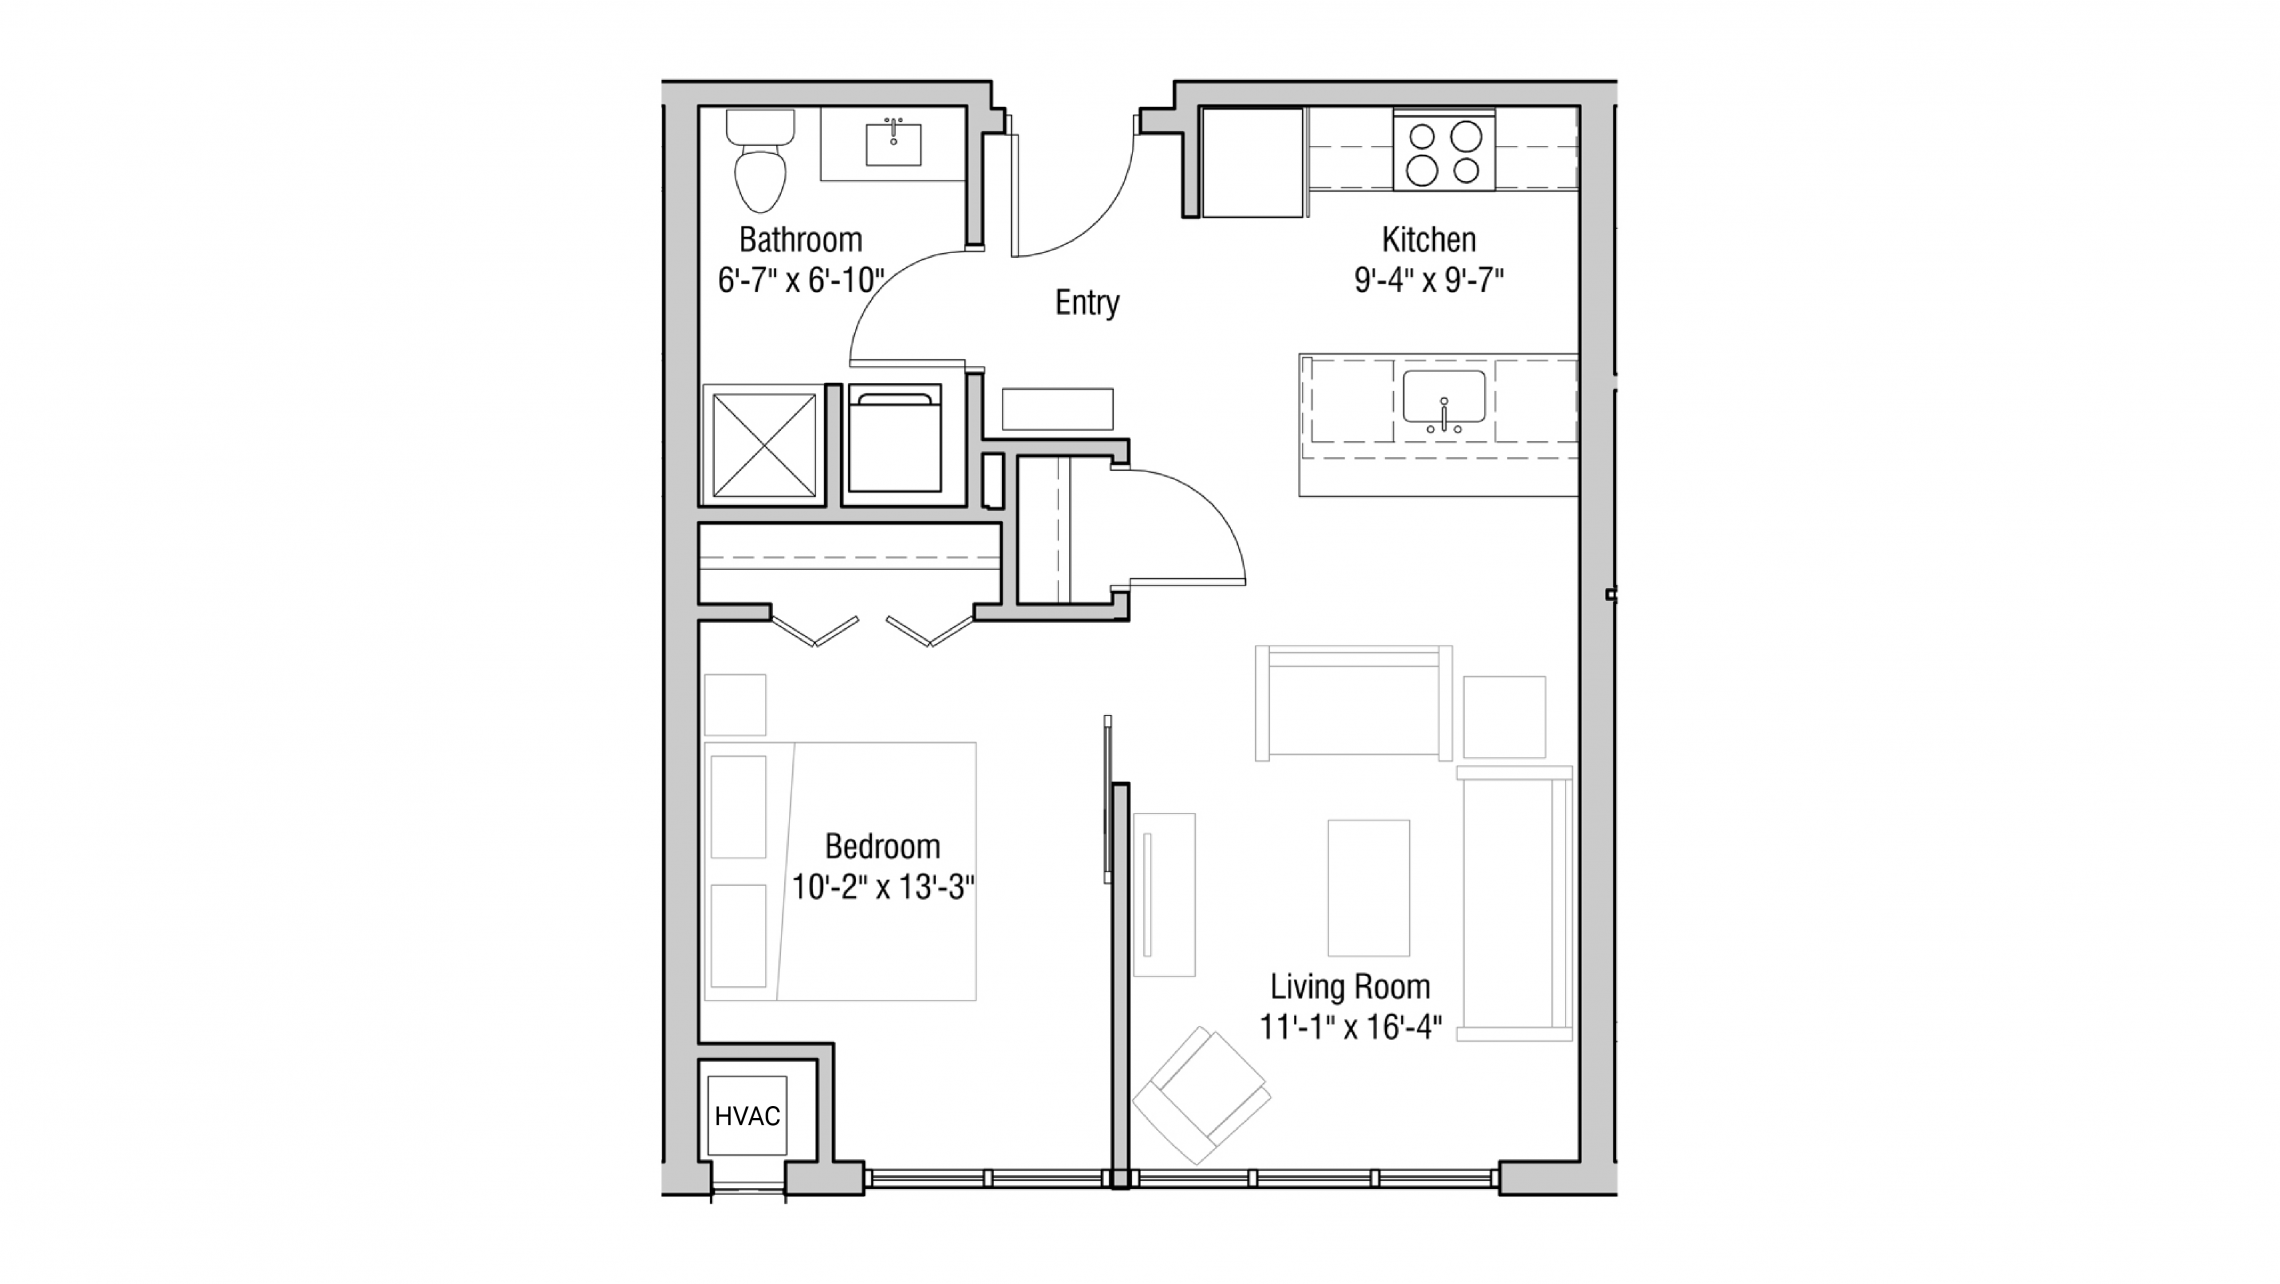 ULI Quarter Row 304 - One Bedroom, One Bathroom